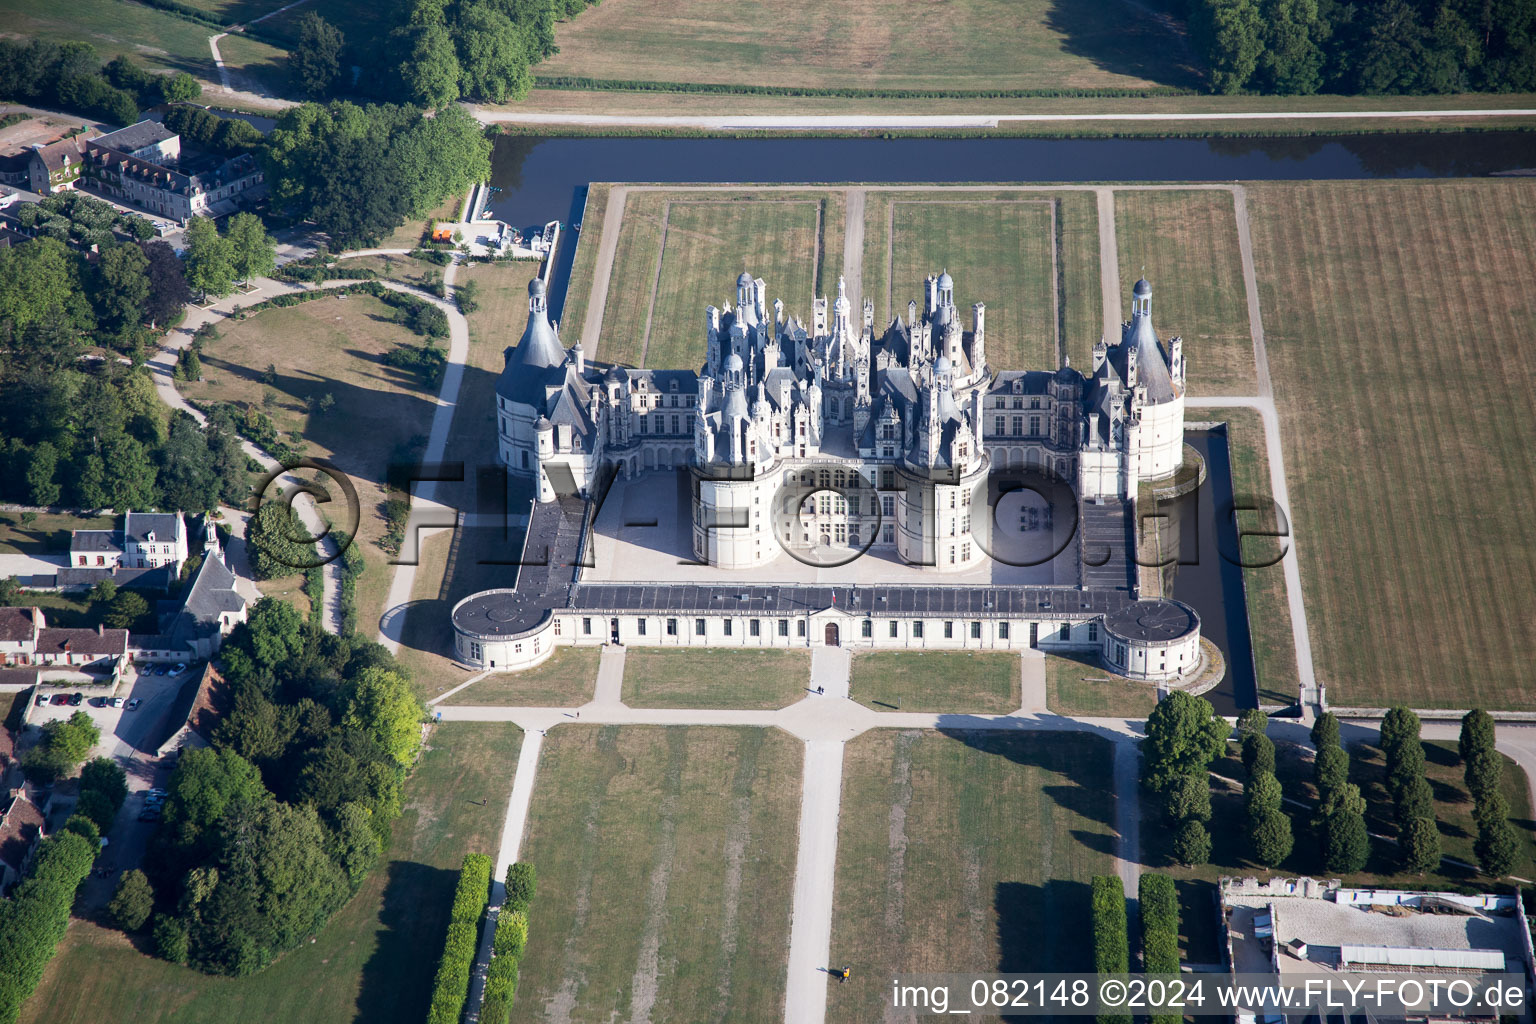 Building complex in the park of the castle Chateau de Chambord in Chambord in Centre-Val de Loire, France